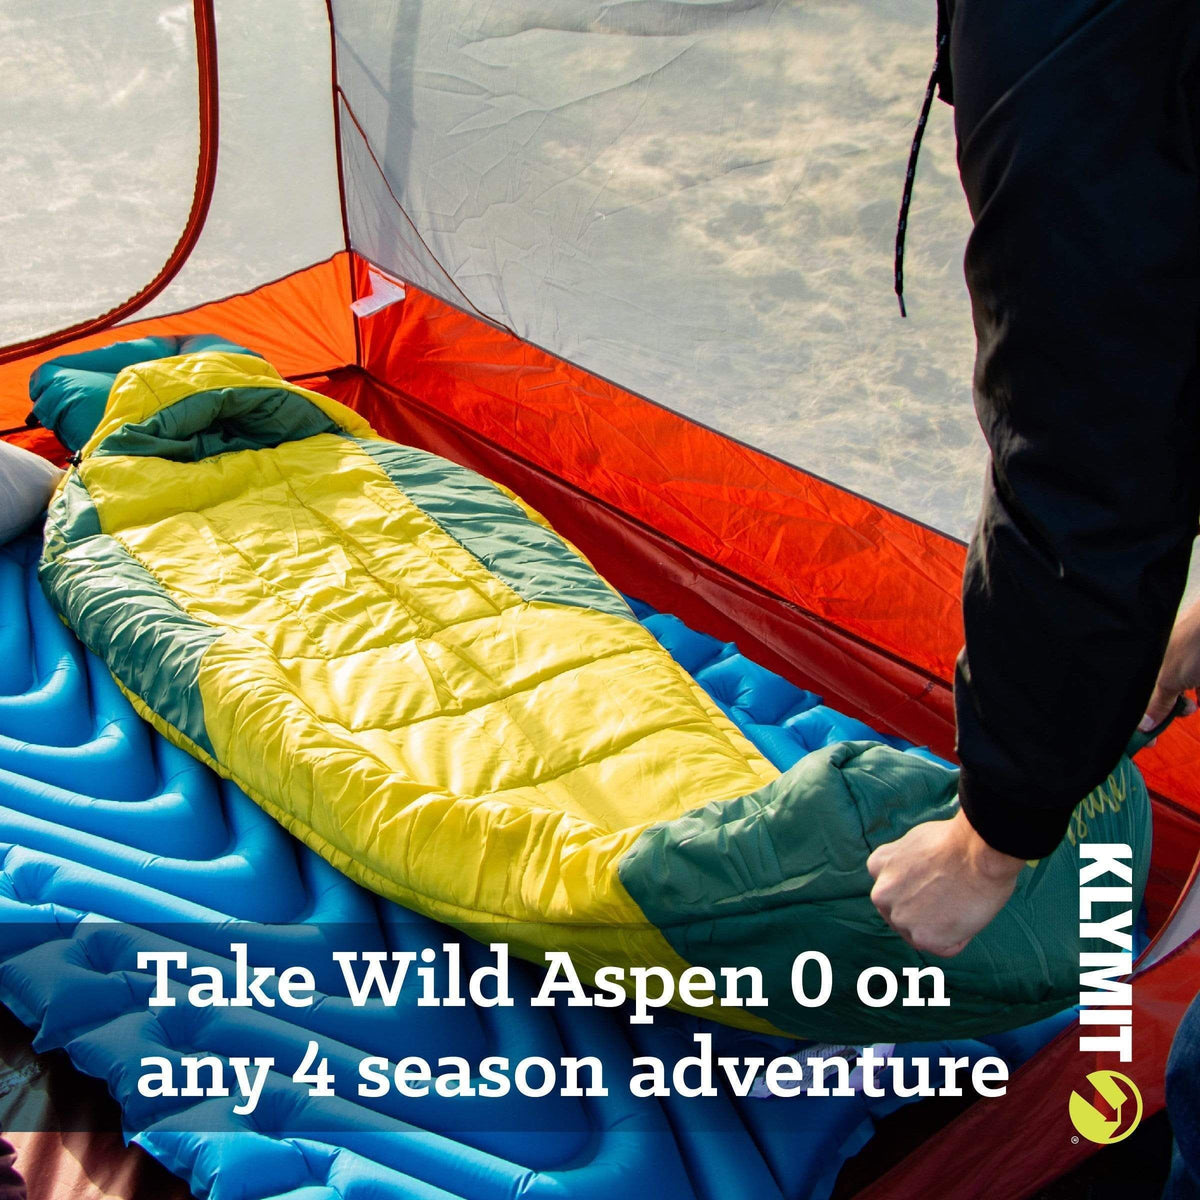 Klymit Camping Gear Wild Aspen 0 Sleeping Bags by Klymit